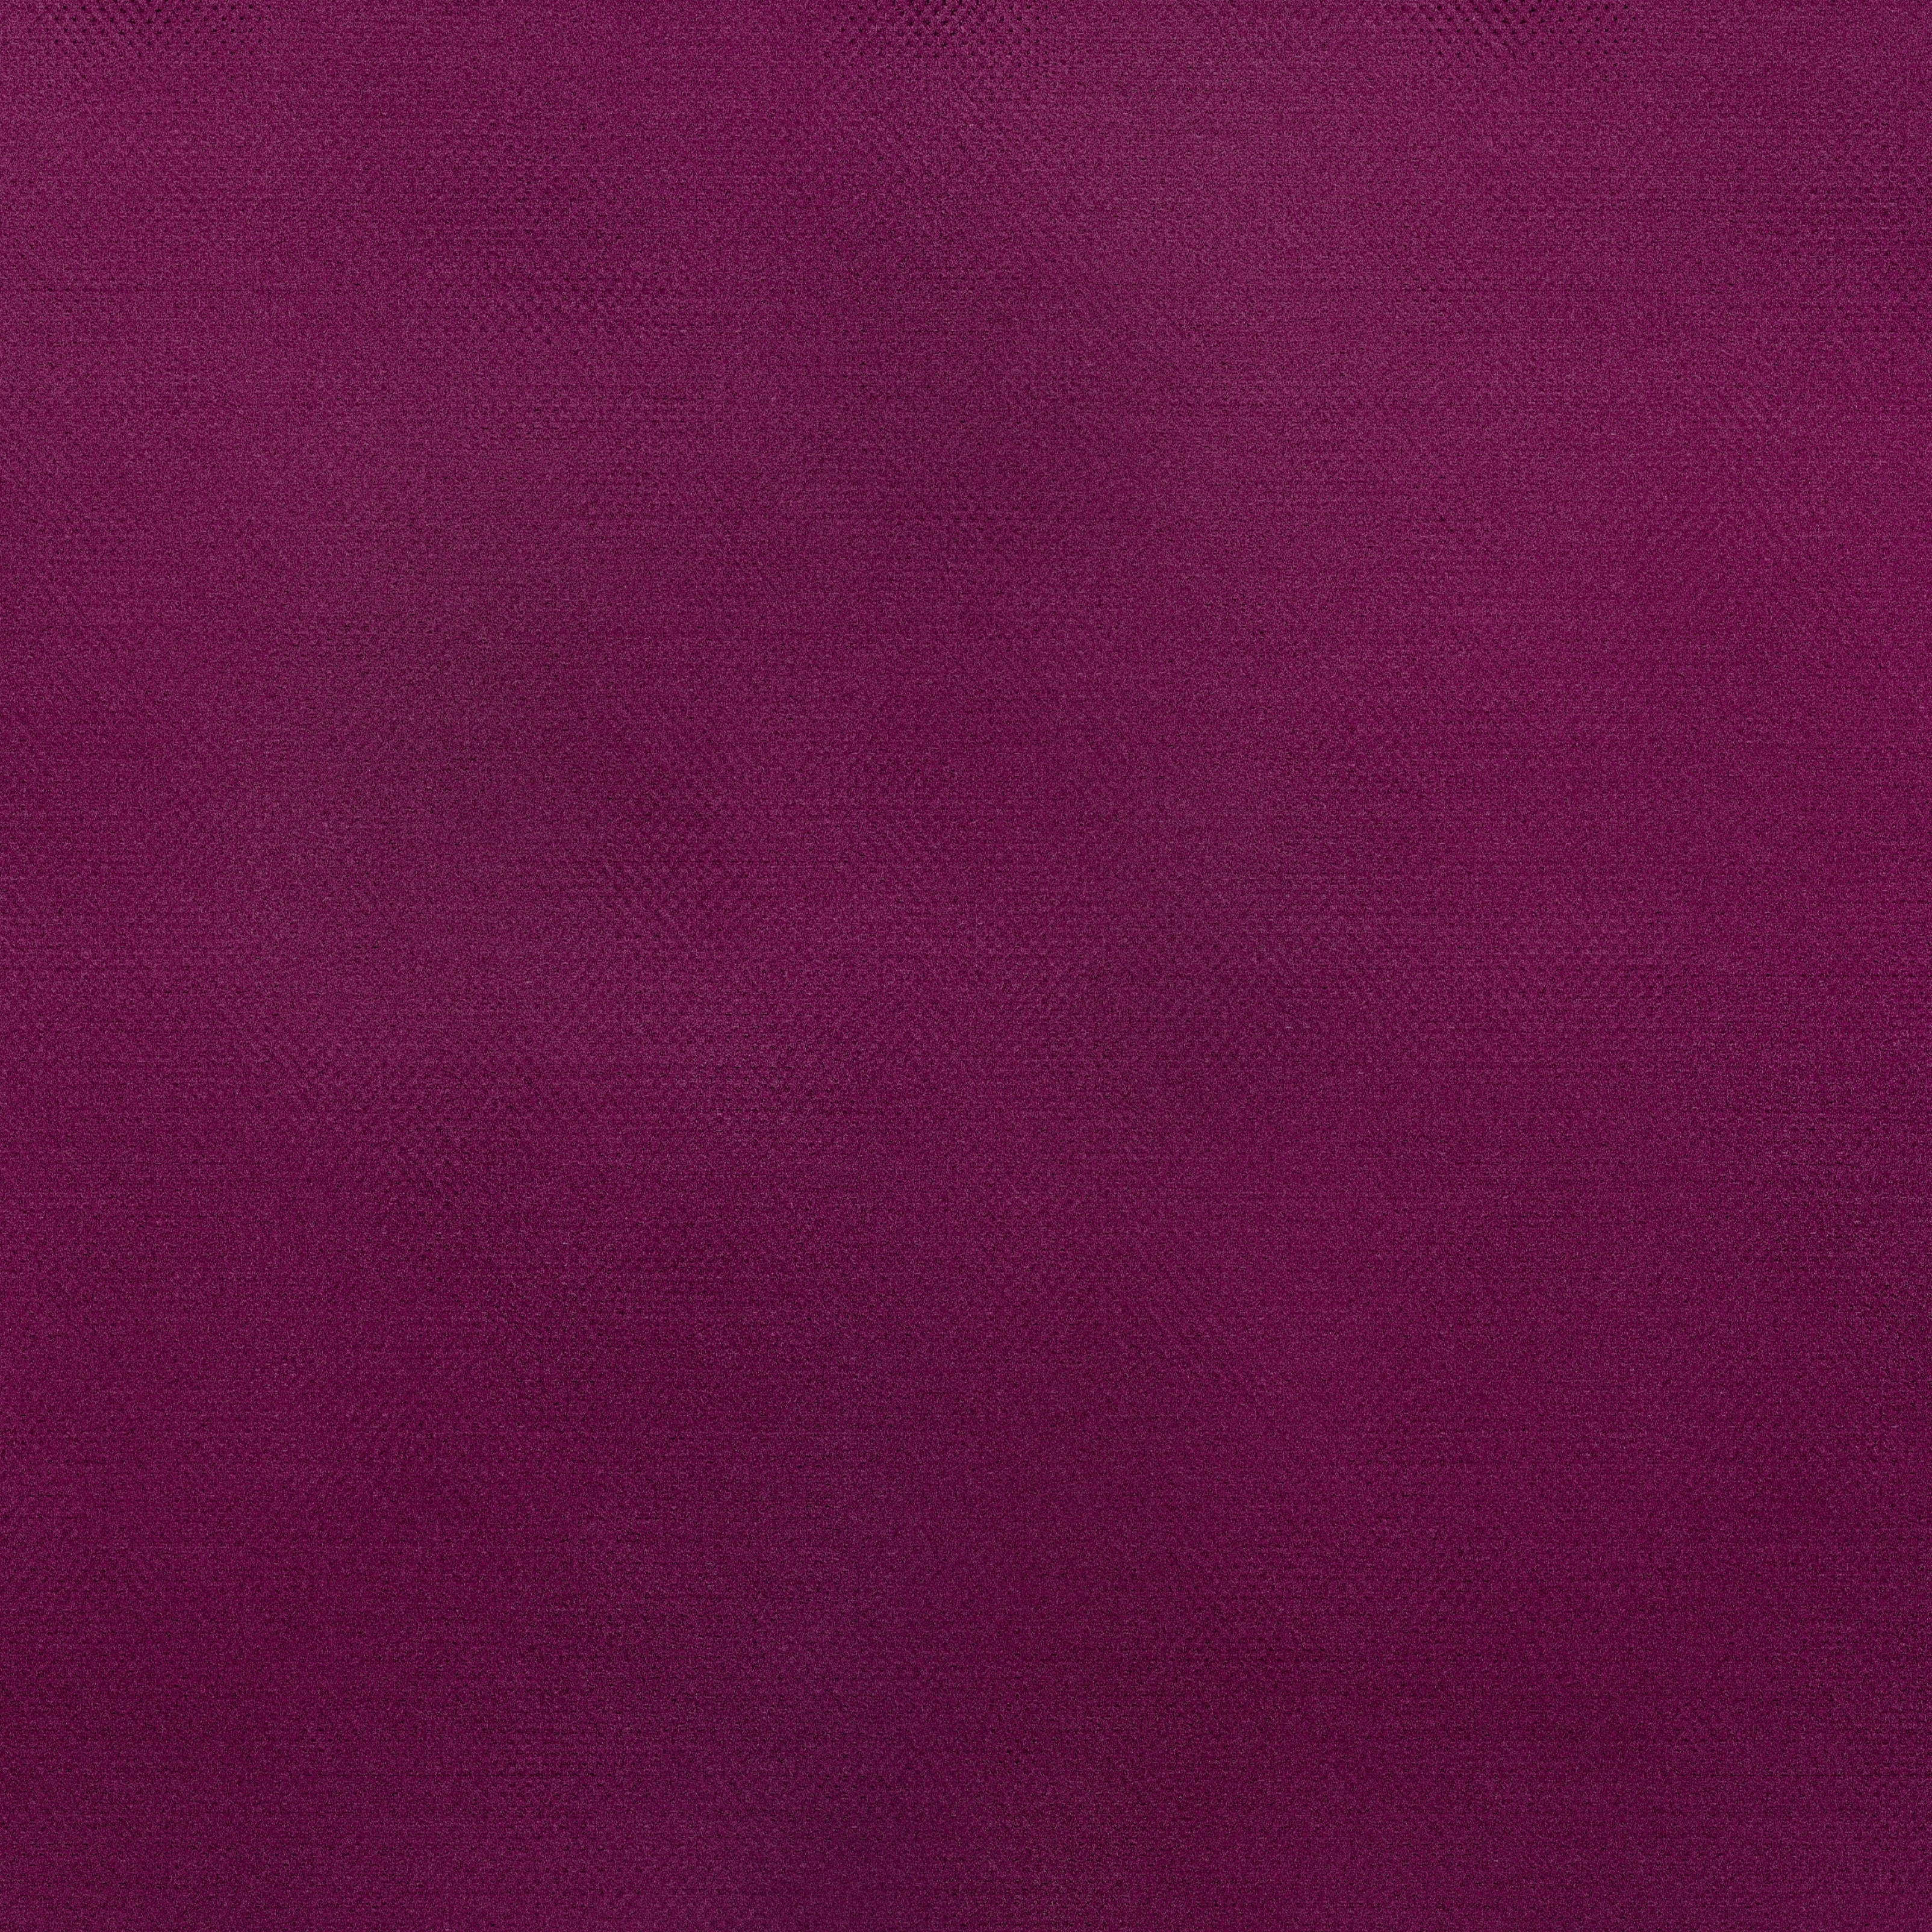 Purple Velvet Fabric Cloth Pattern Texture iPad Wallpaper